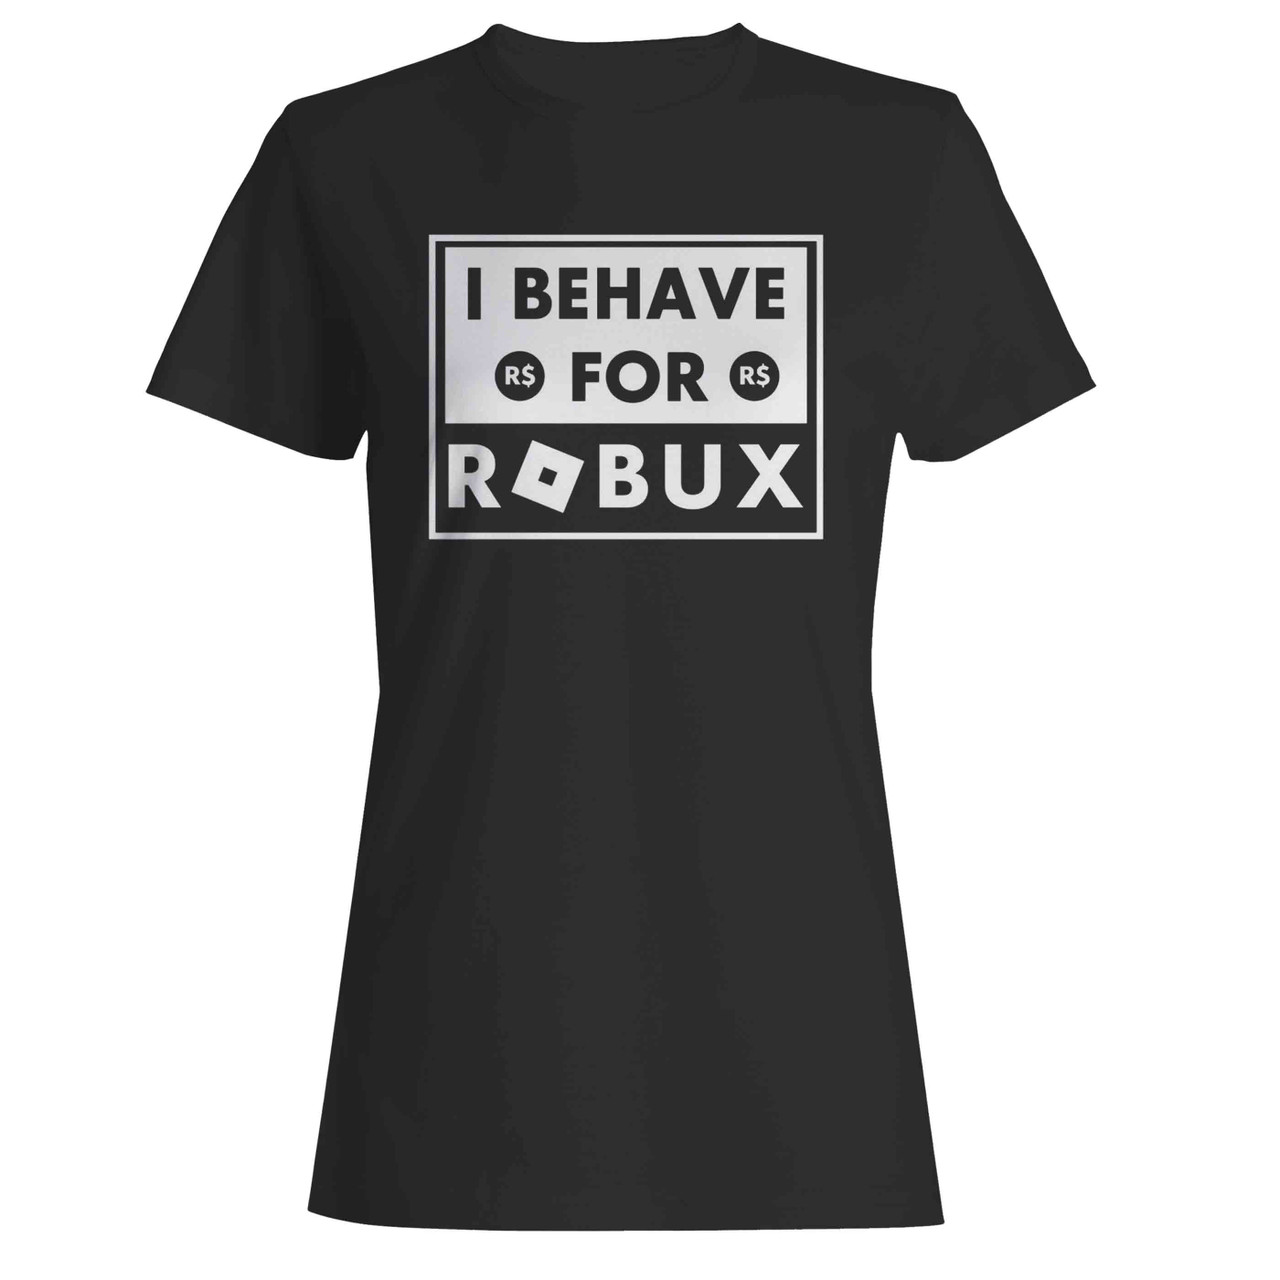 I love my new Roblox Friendly t shirt : r/roblox